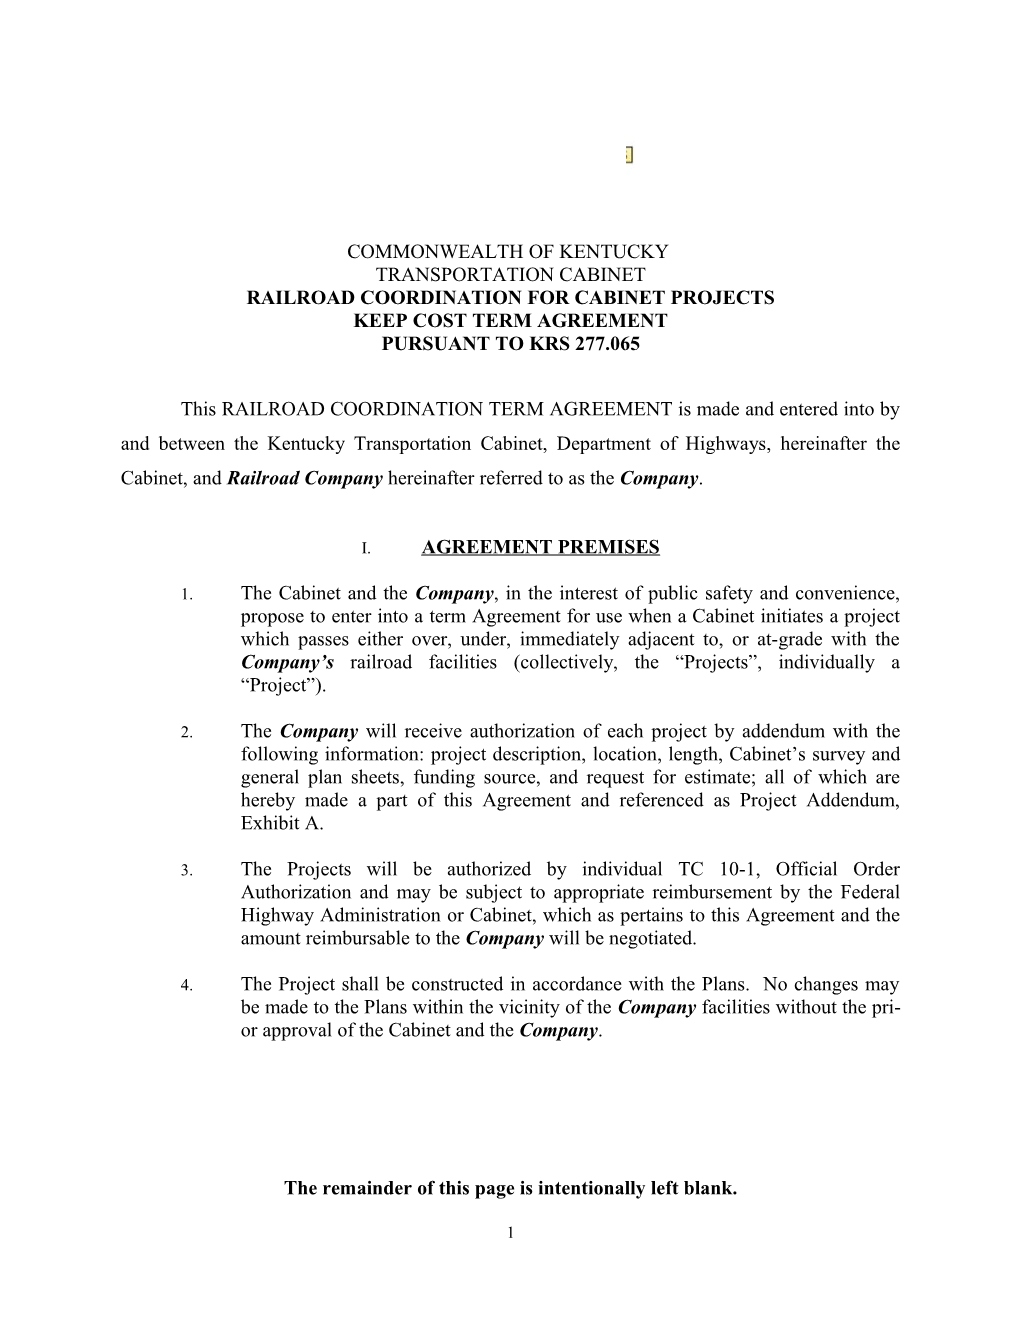 Rail Coordination Term Agreement (Revised 4-23-14)